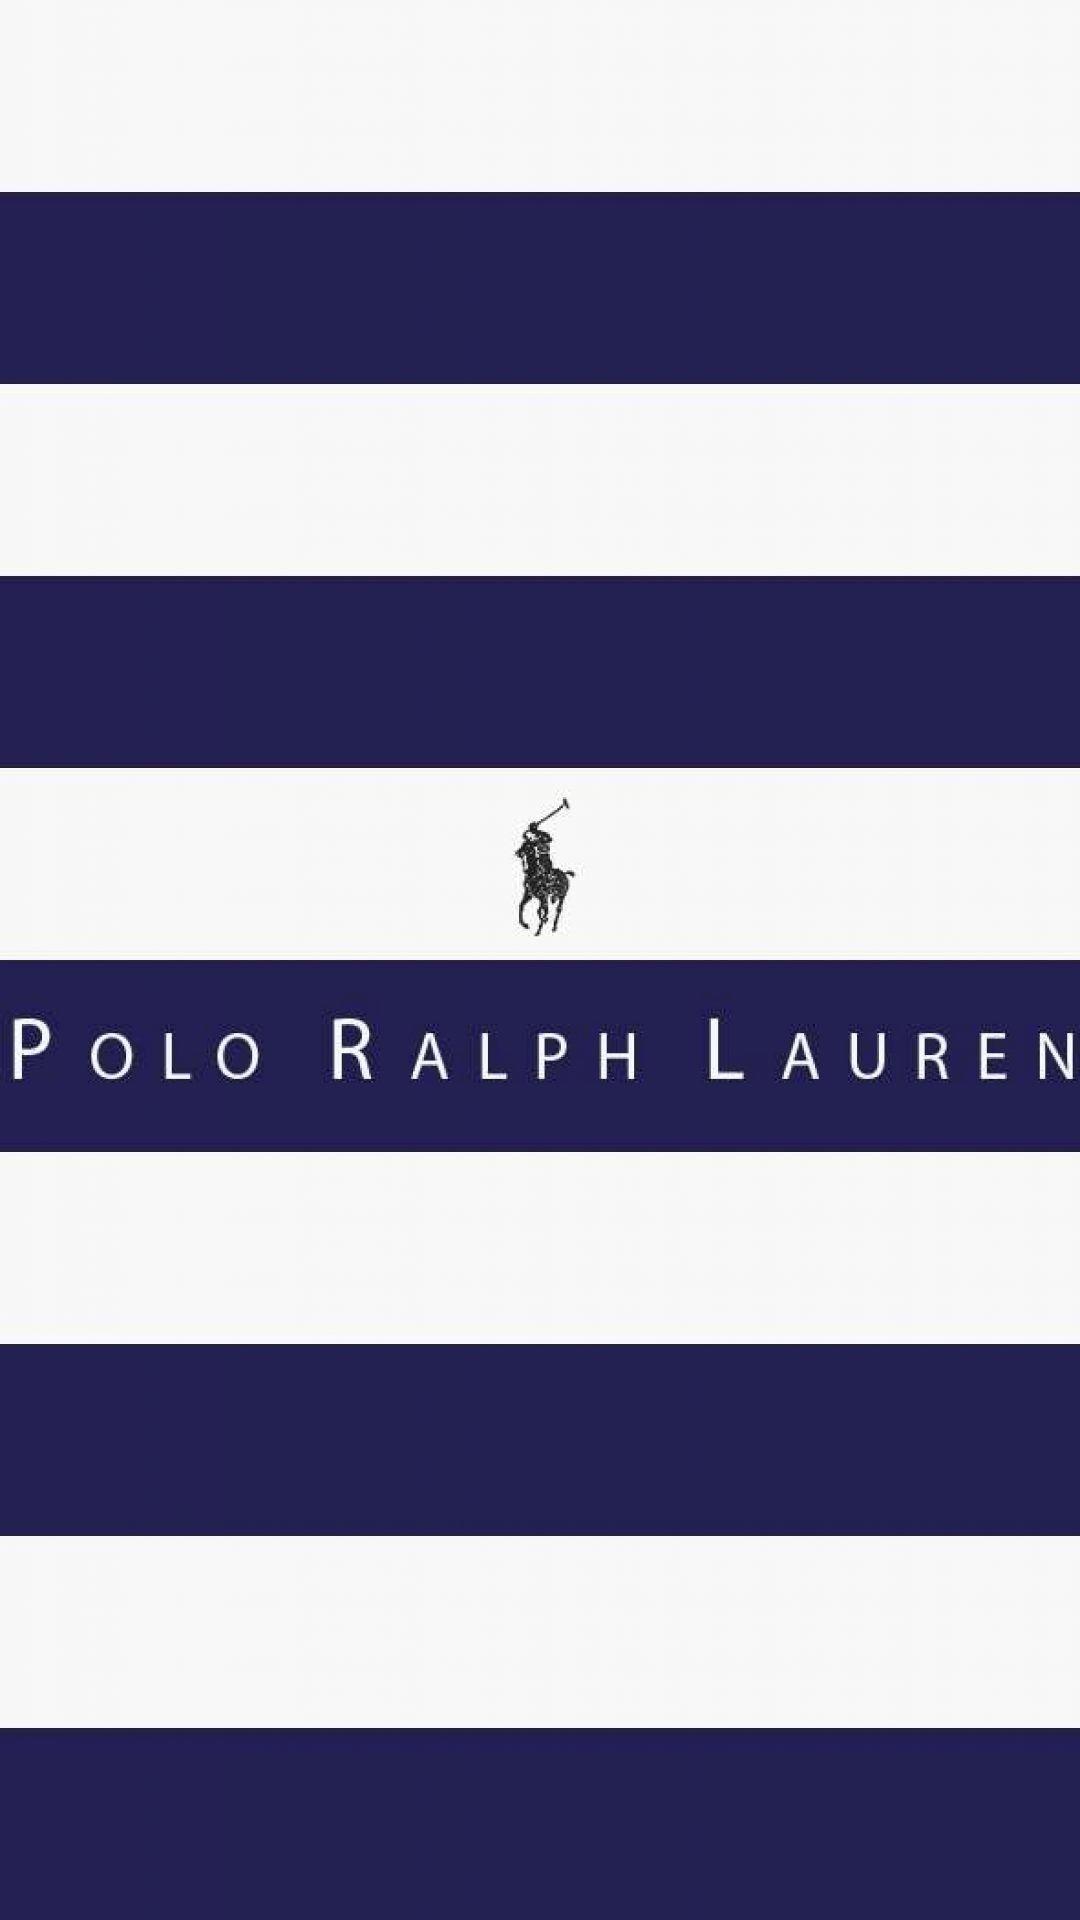 Polo Ralph Lauren Logo Download Best Hd Wallpaper